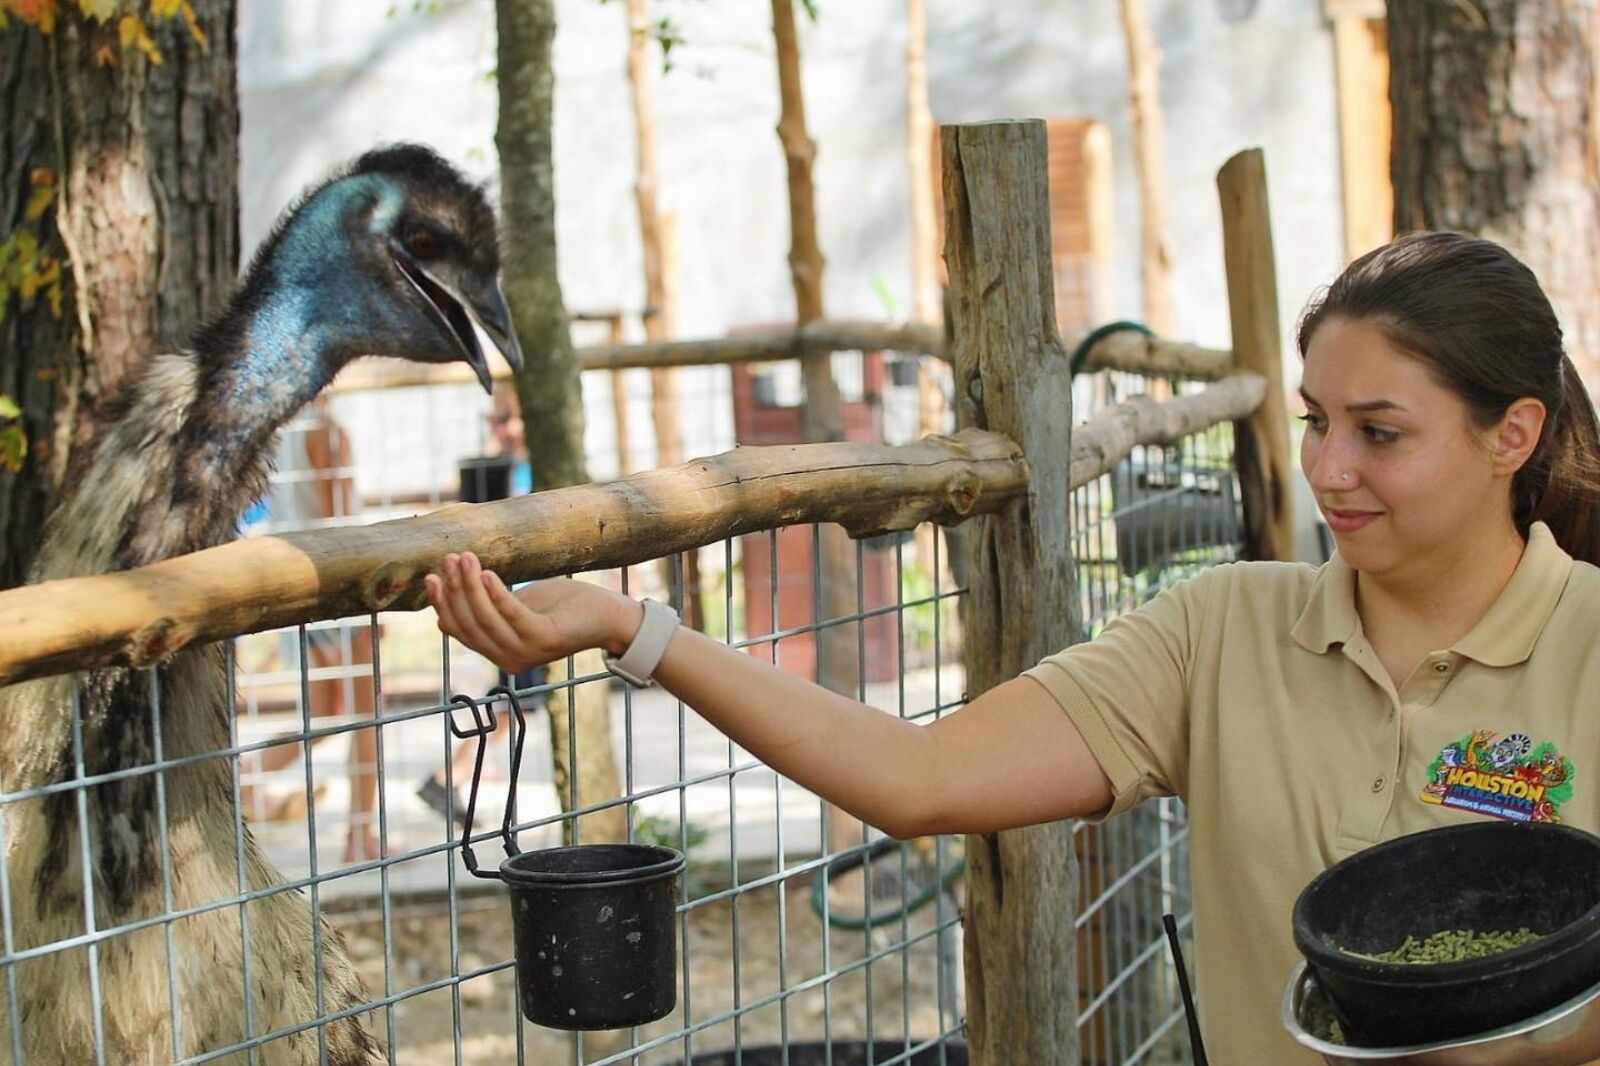 Staff feeding emu at Man with bird at Houston Interactive Aquarium